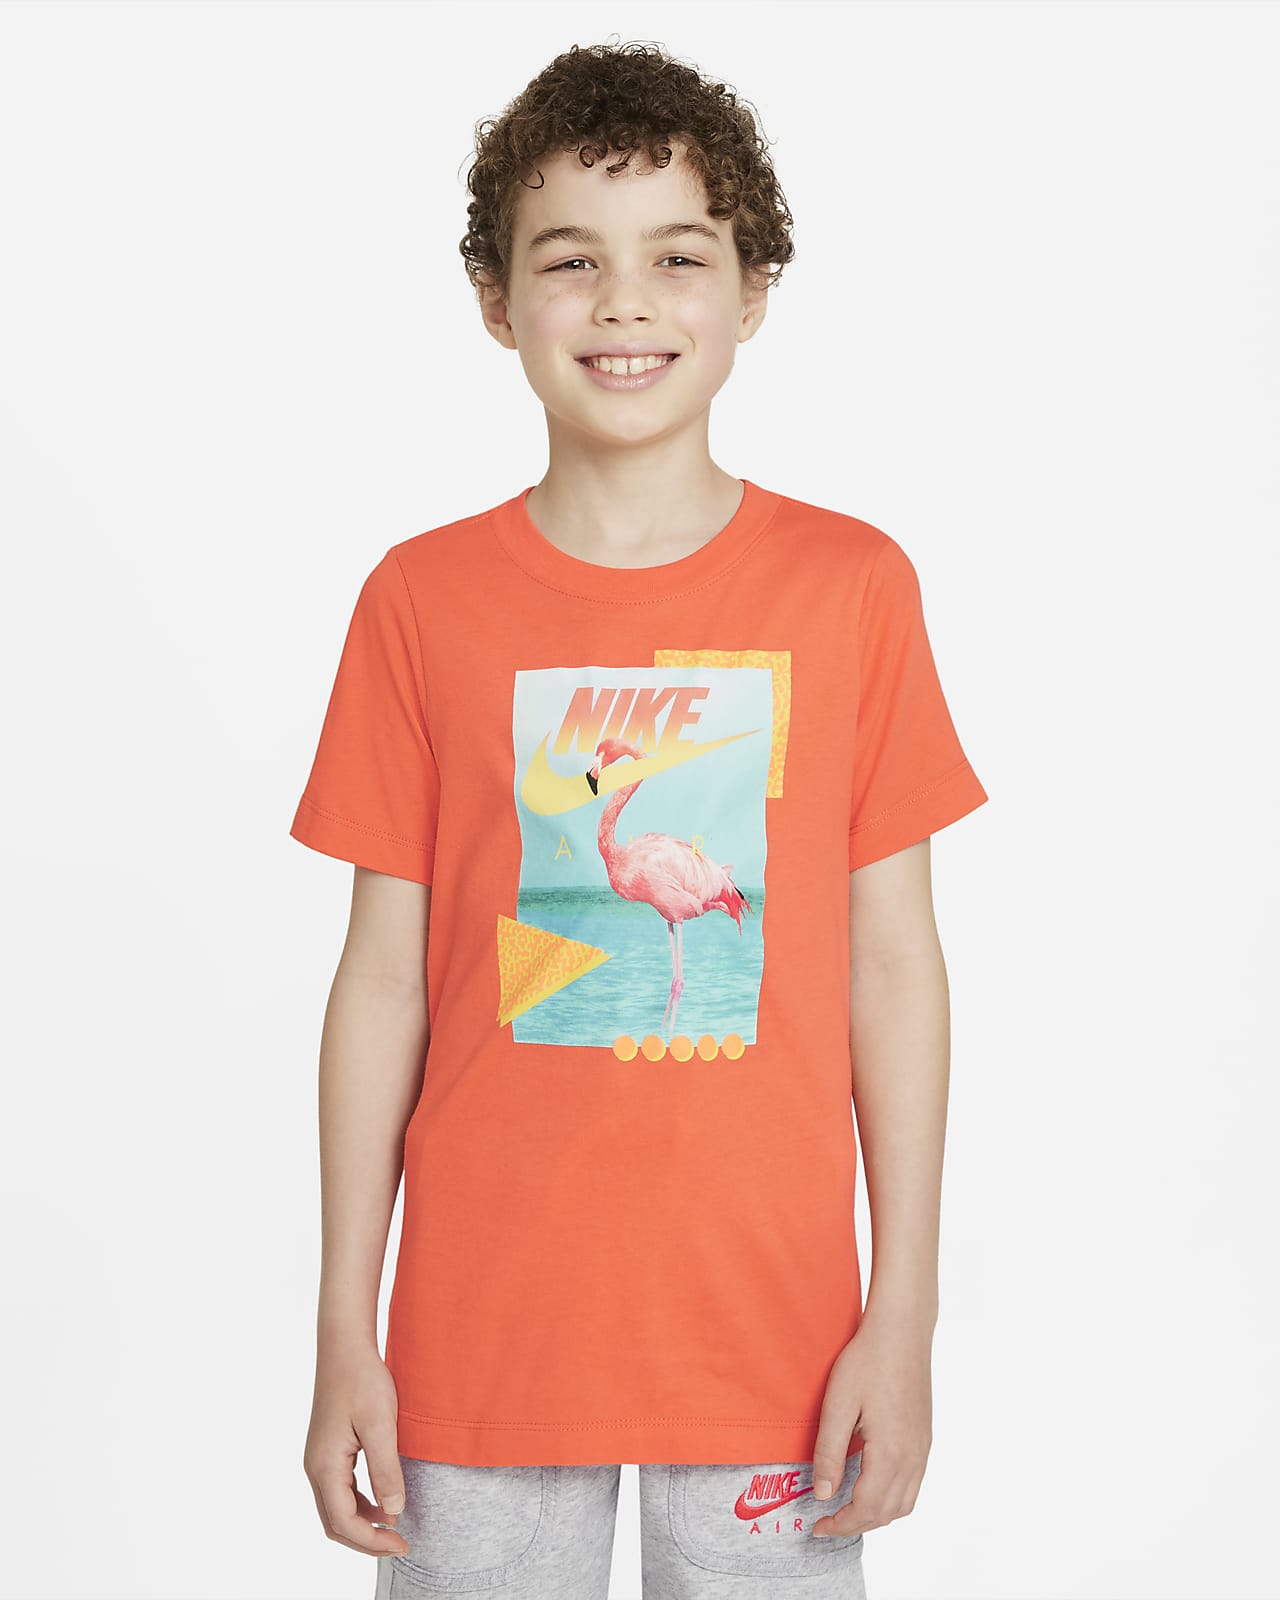 orange t shirt kid